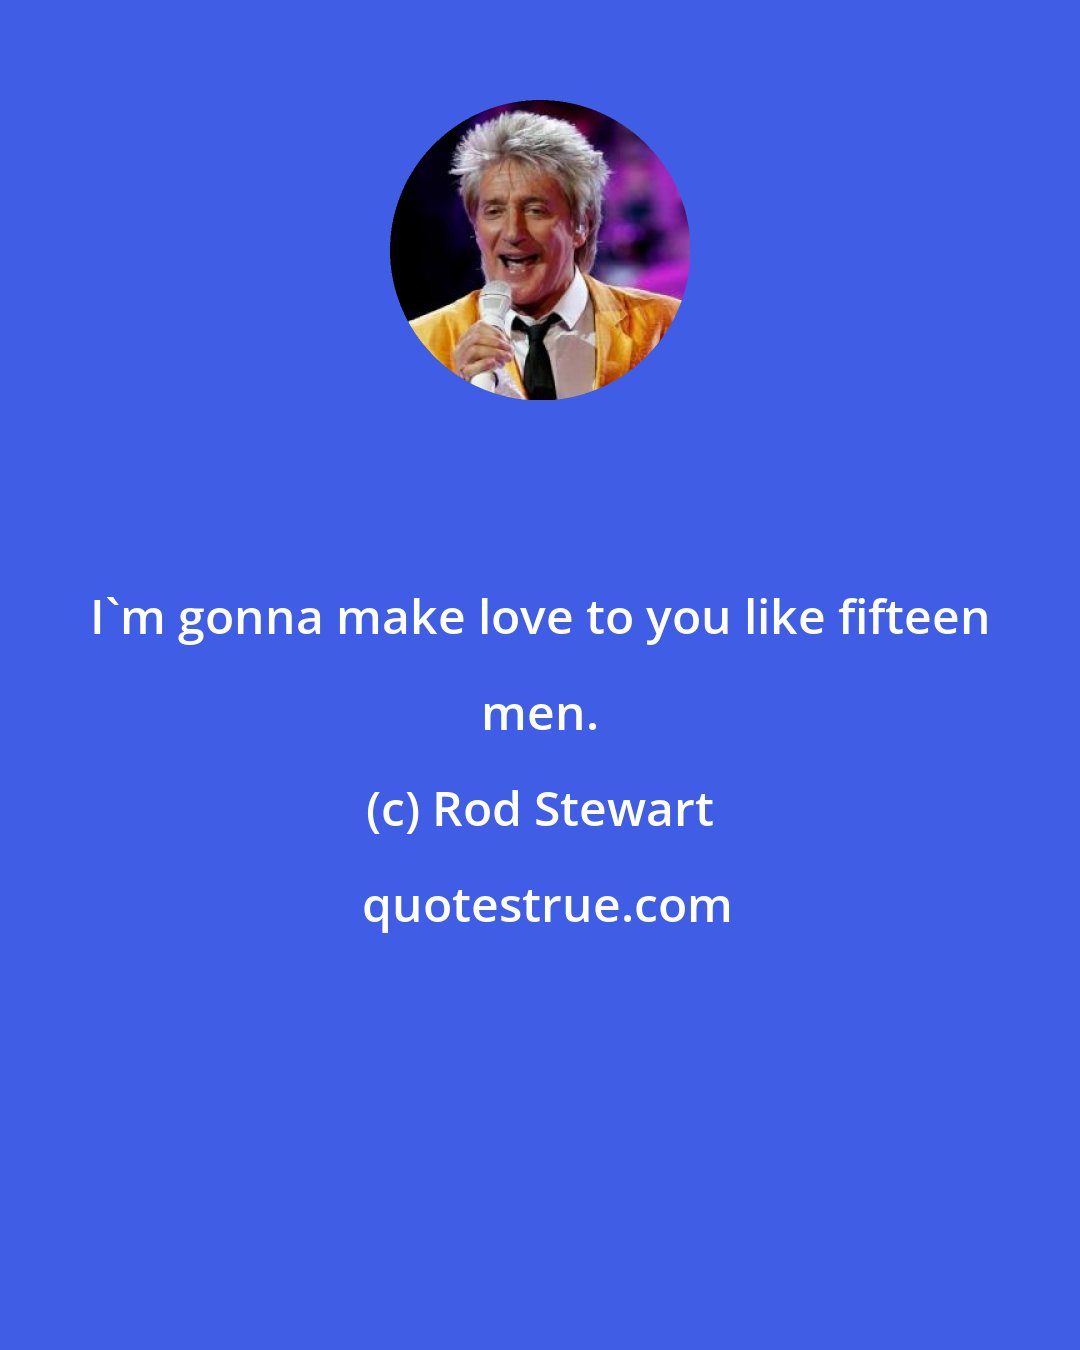 Rod Stewart: I'm gonna make love to you like fifteen men.